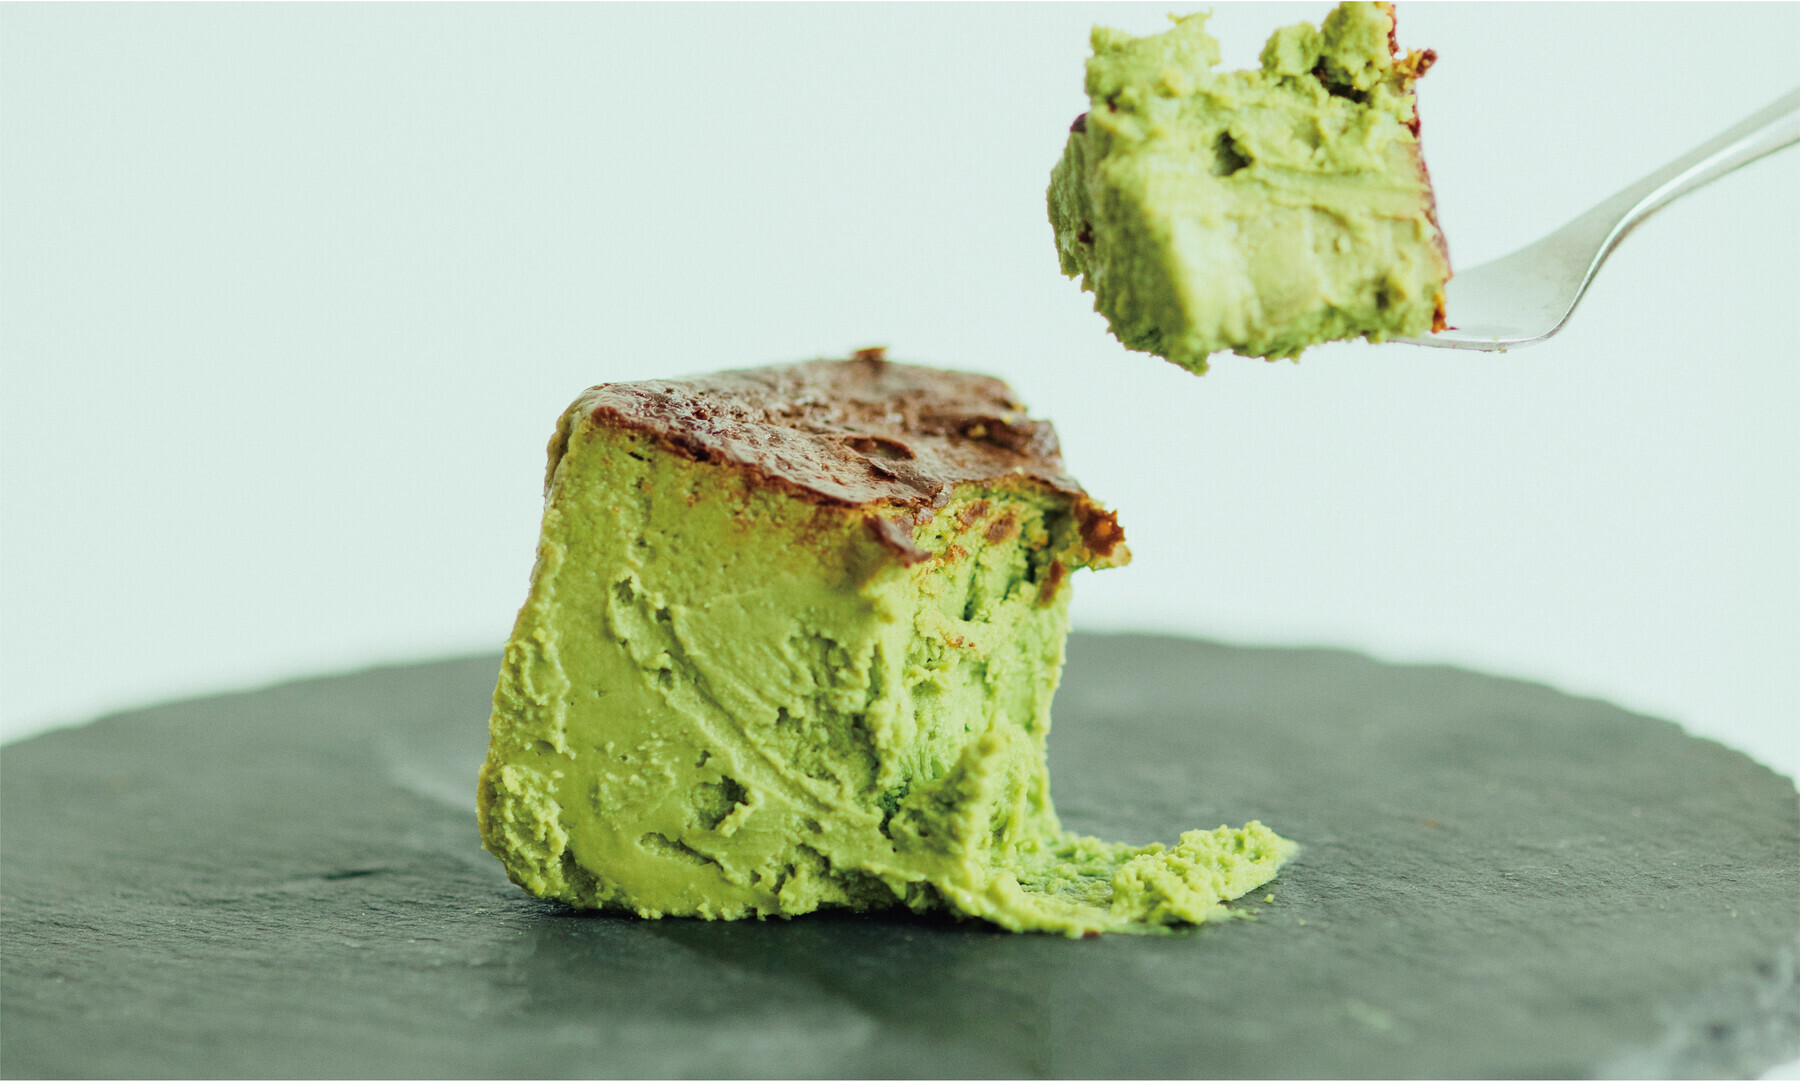 BLANCA verde(ベルデ)抹茶のバスクチーズケーキ